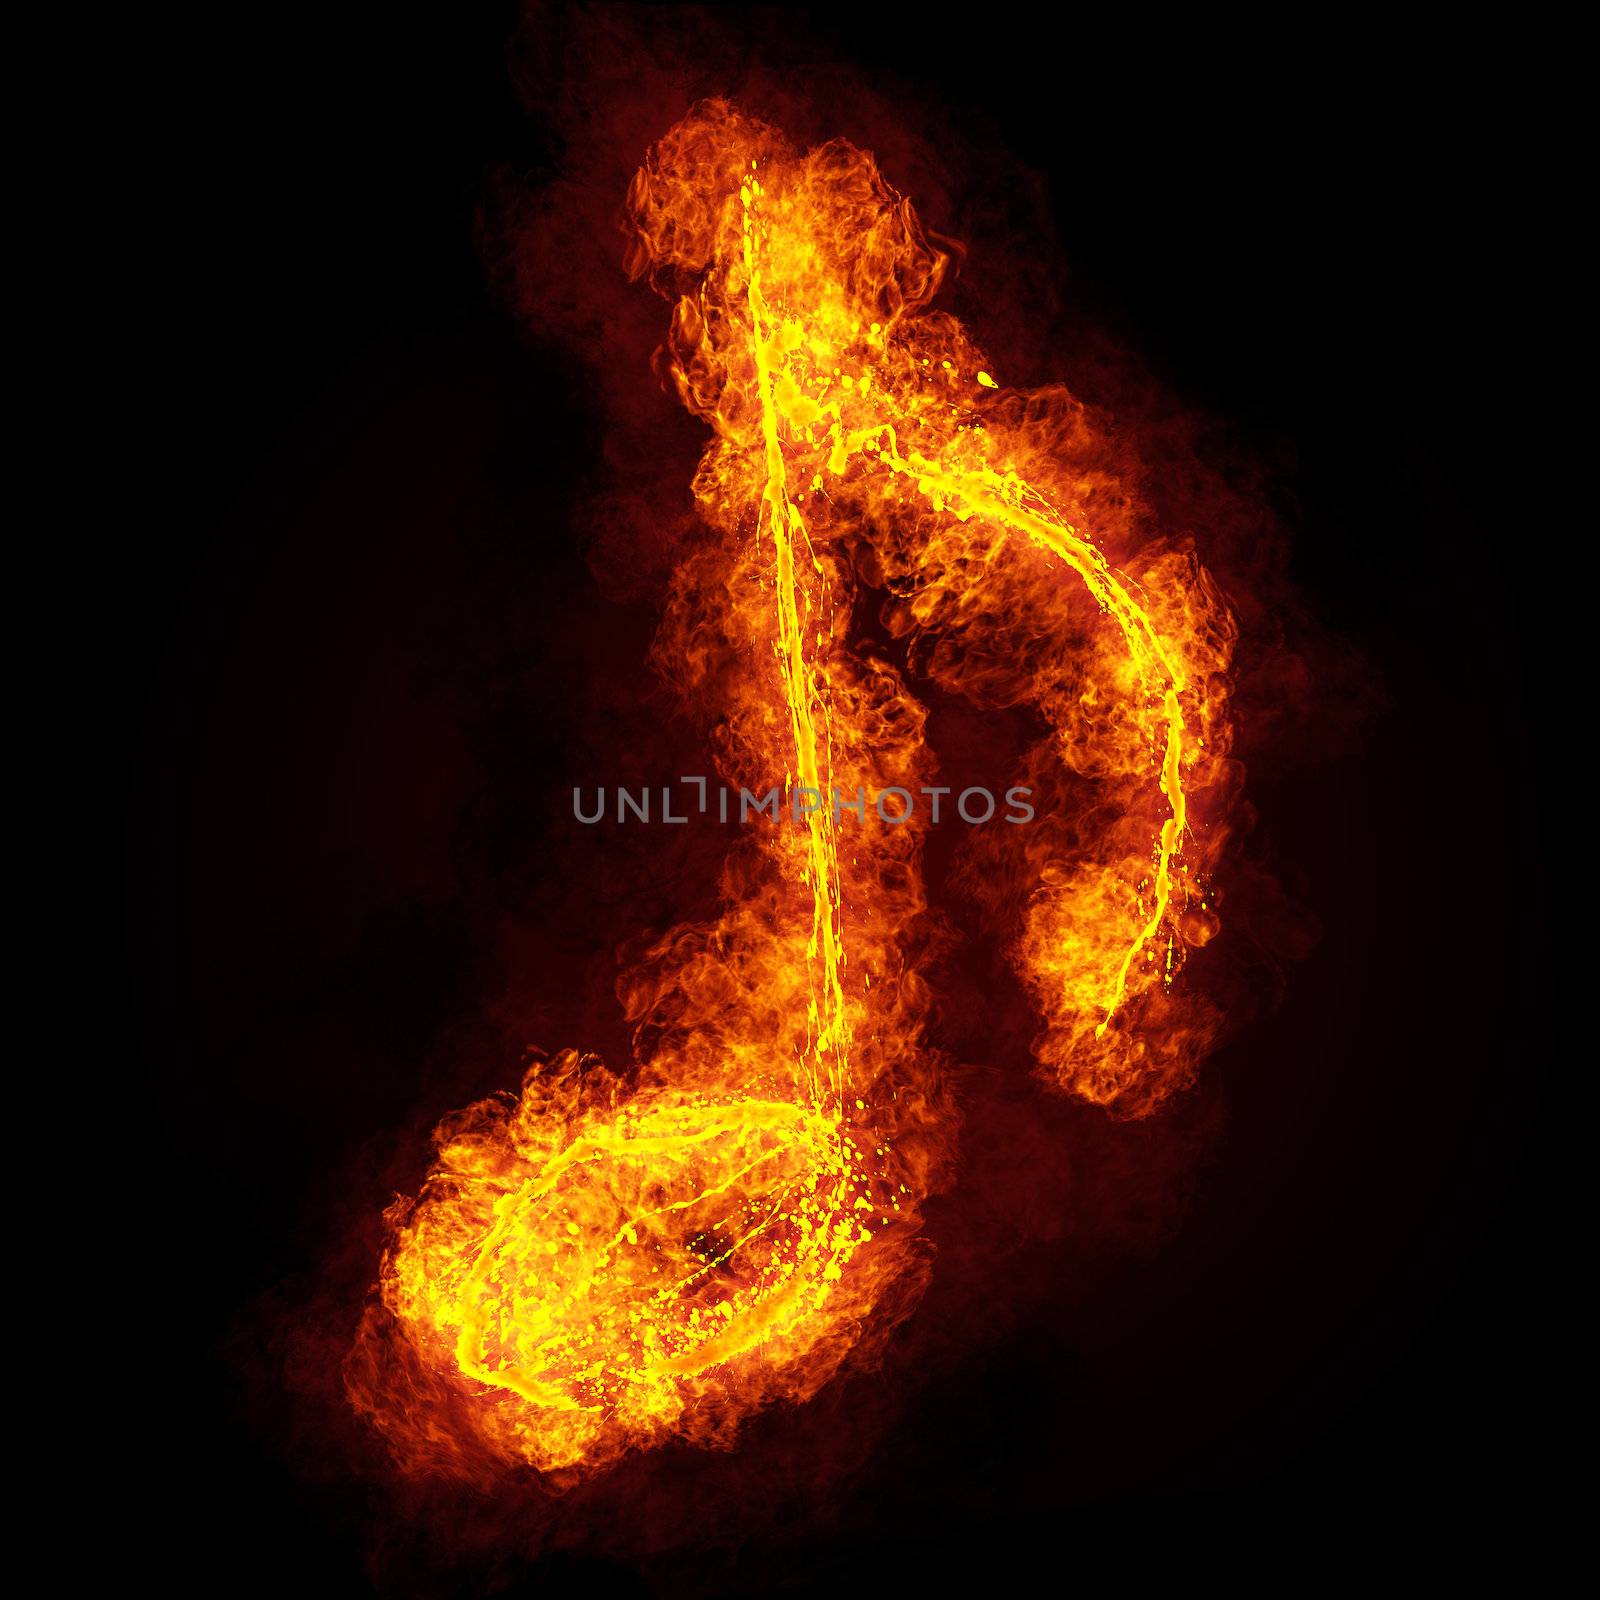  Fiery musical note symbol  by palinchak